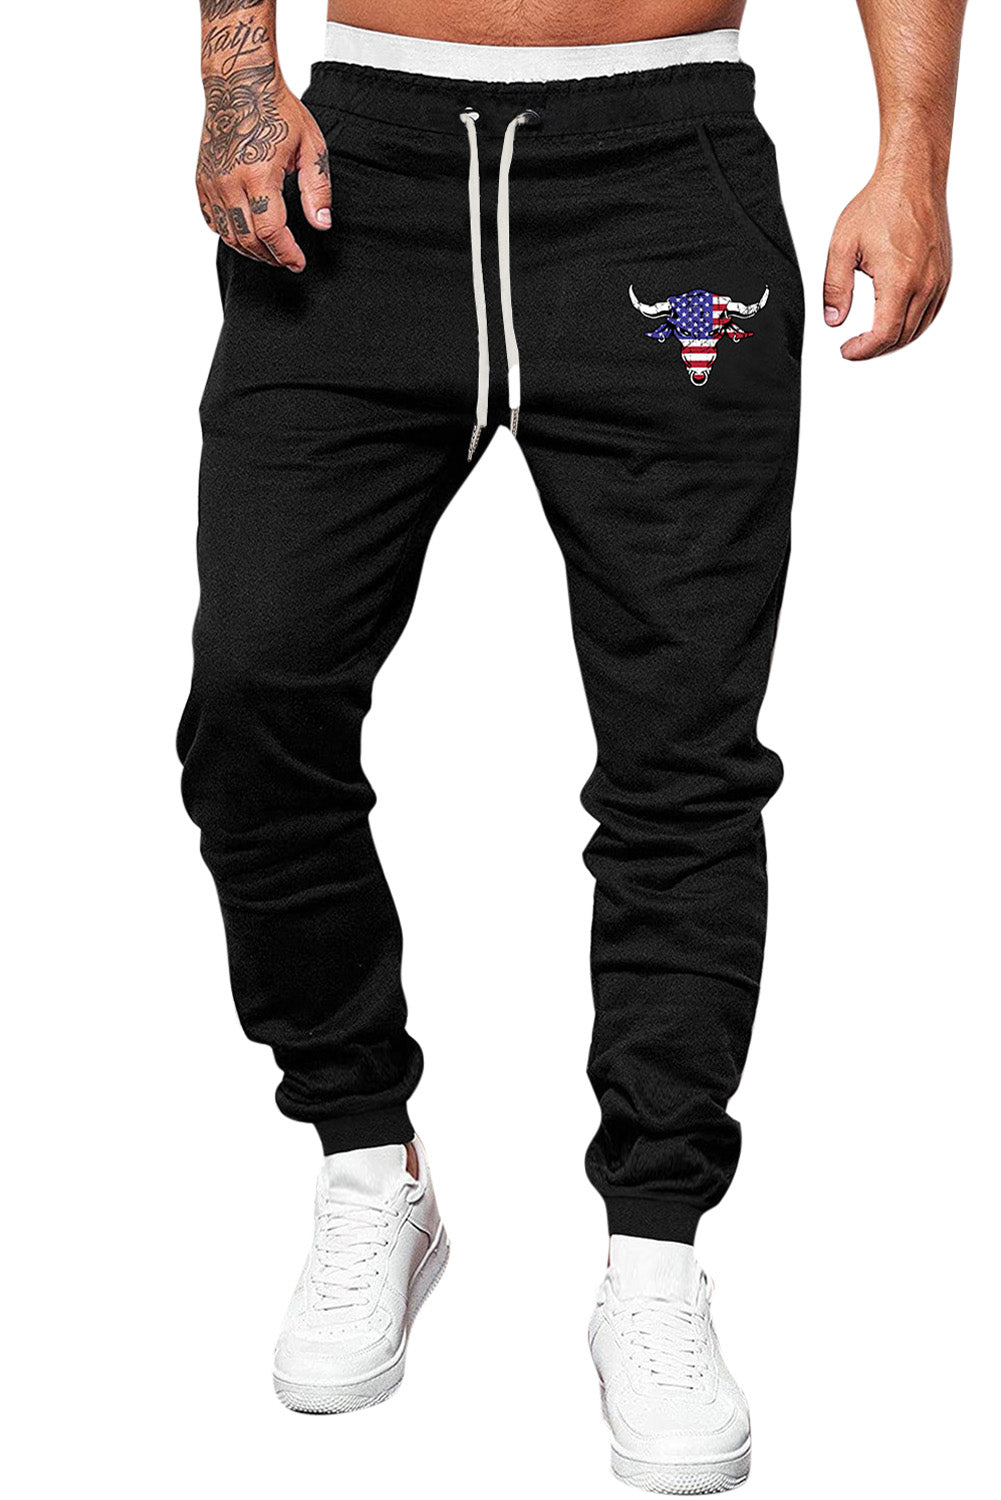 Black American Flag Steer Head Print Drawstring Men's Sweatpants Men's Pants JT's Designer Fashion